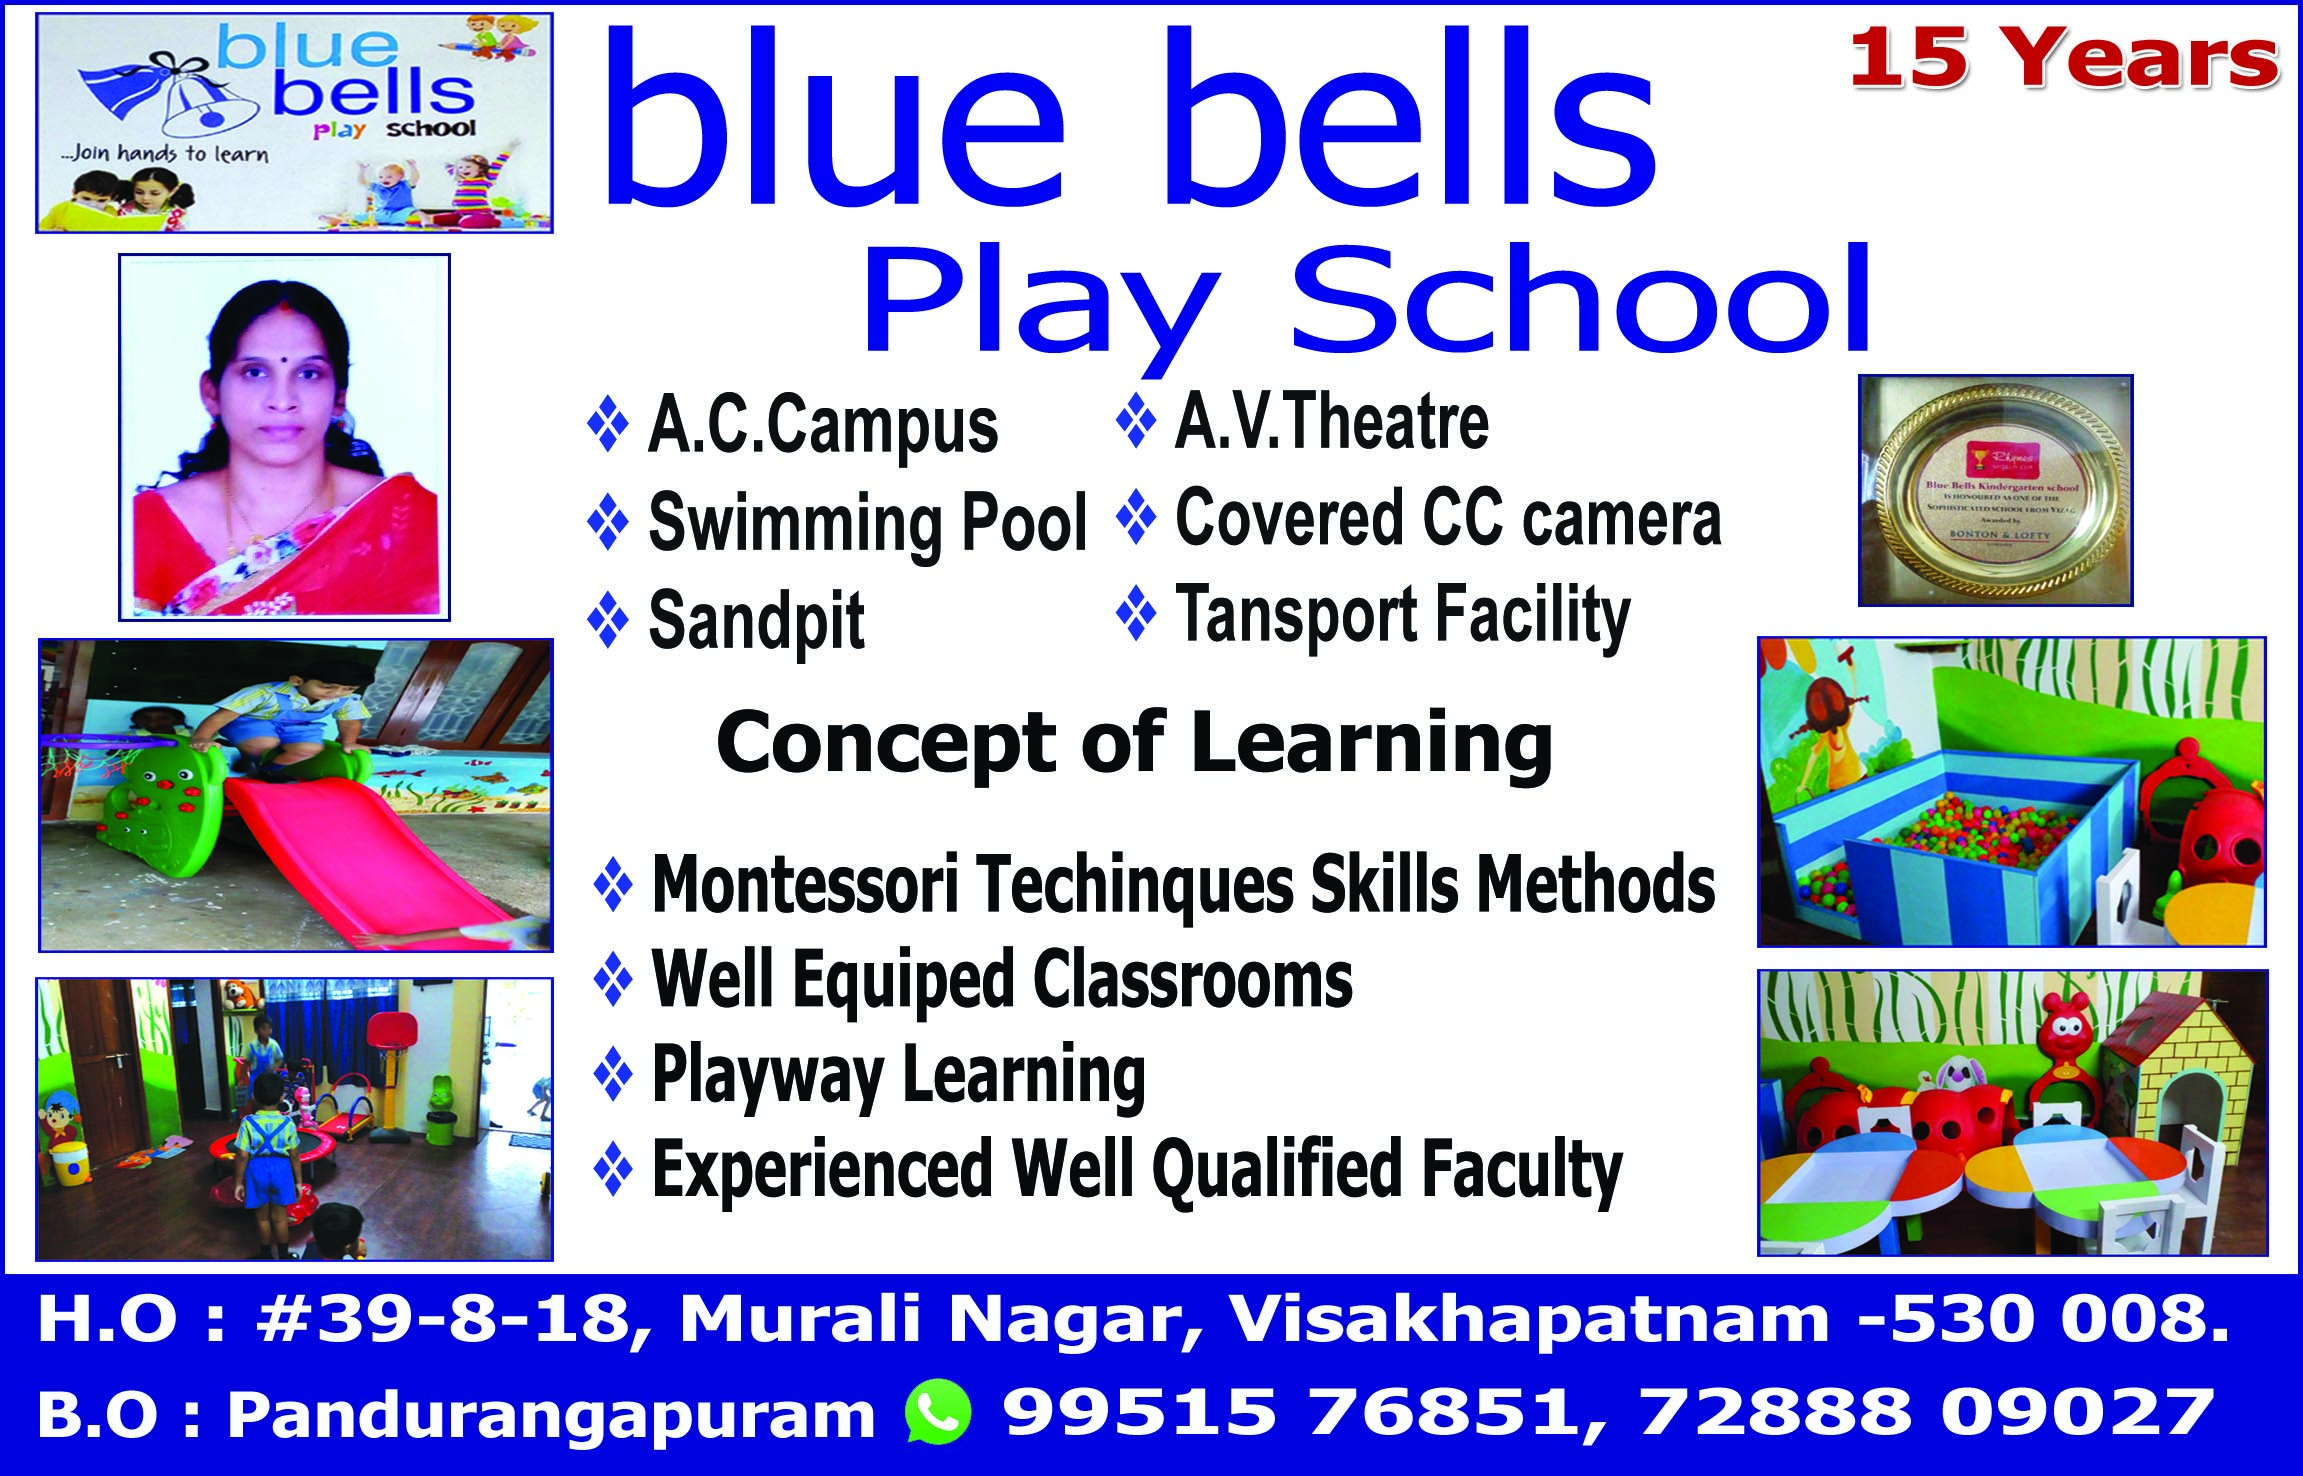 BLUE BELLS PLAY SCHOOL